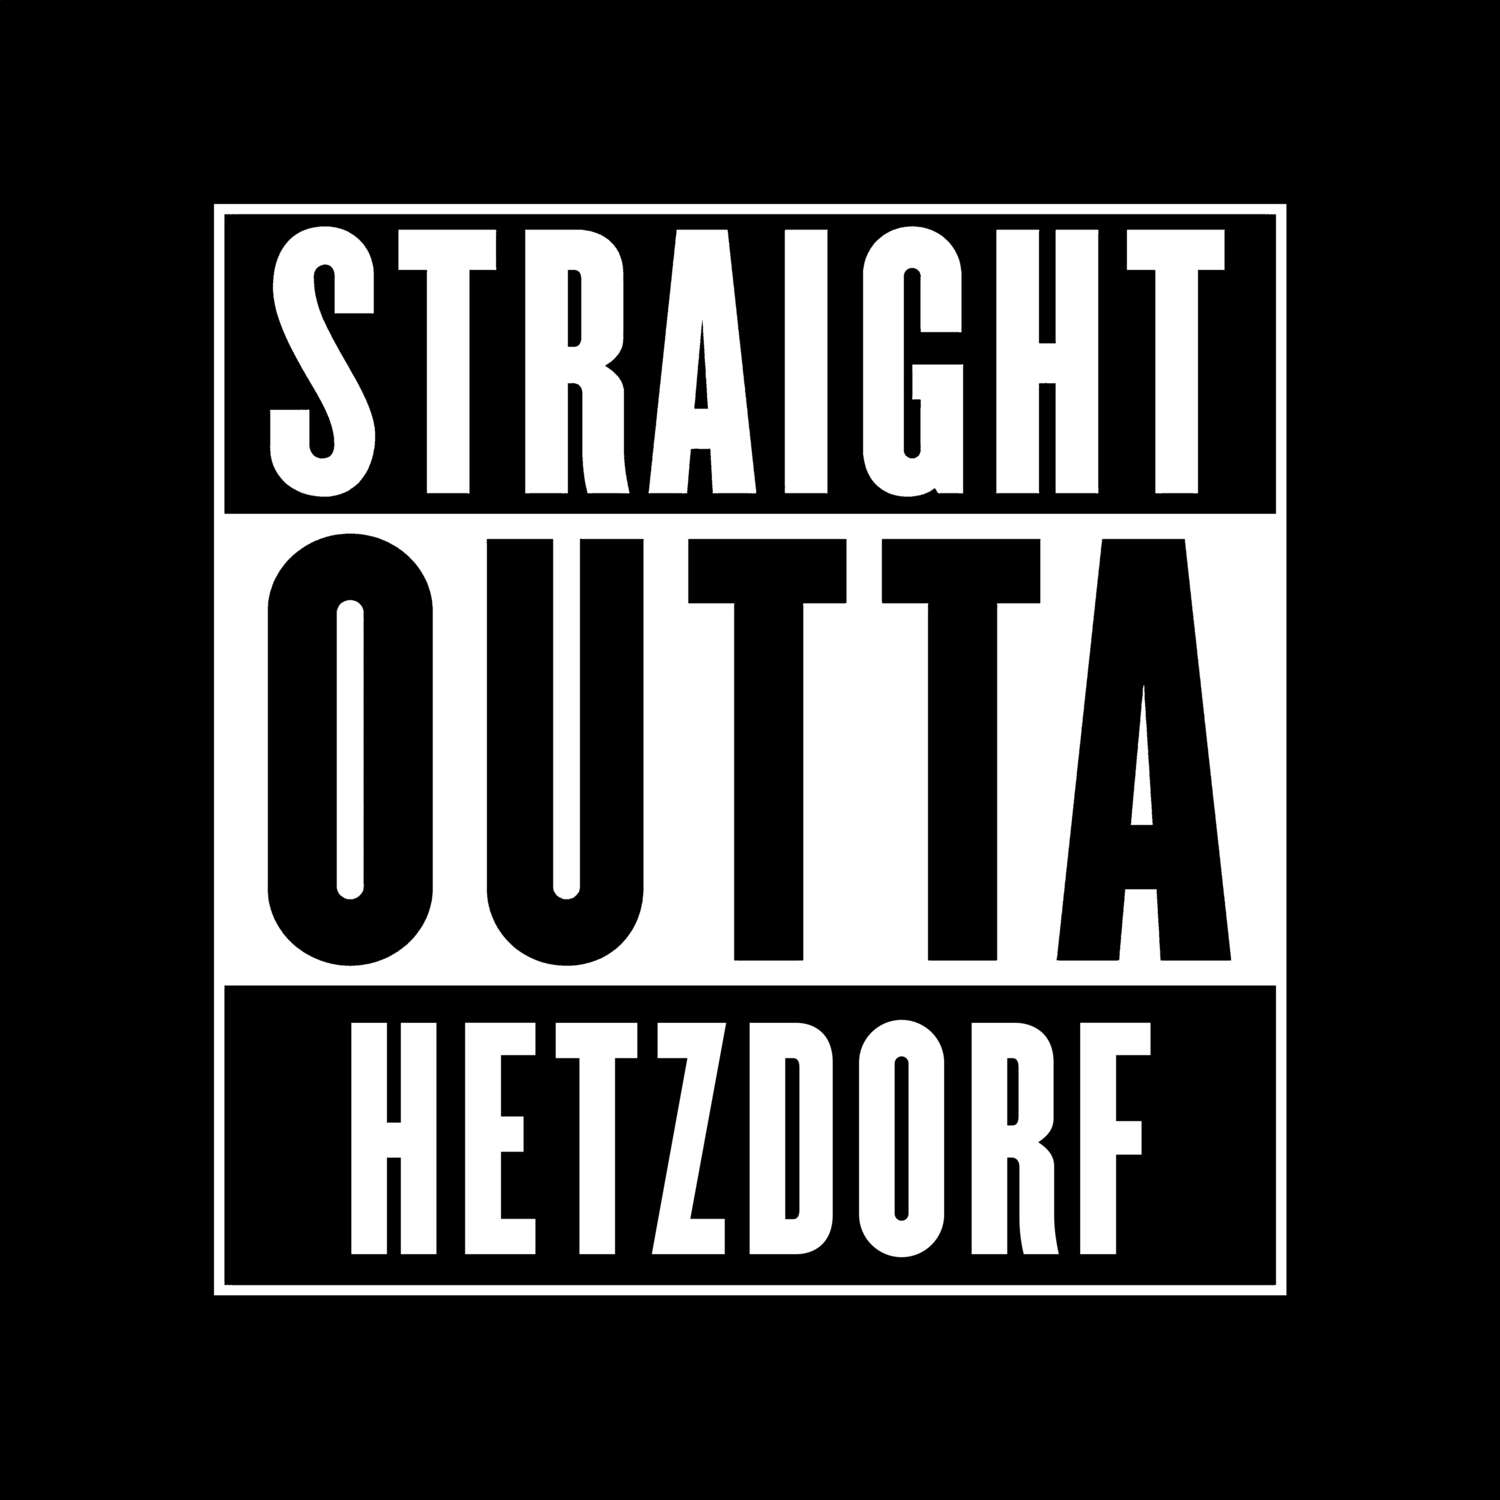 Hetzdorf T-Shirt »Straight Outta«